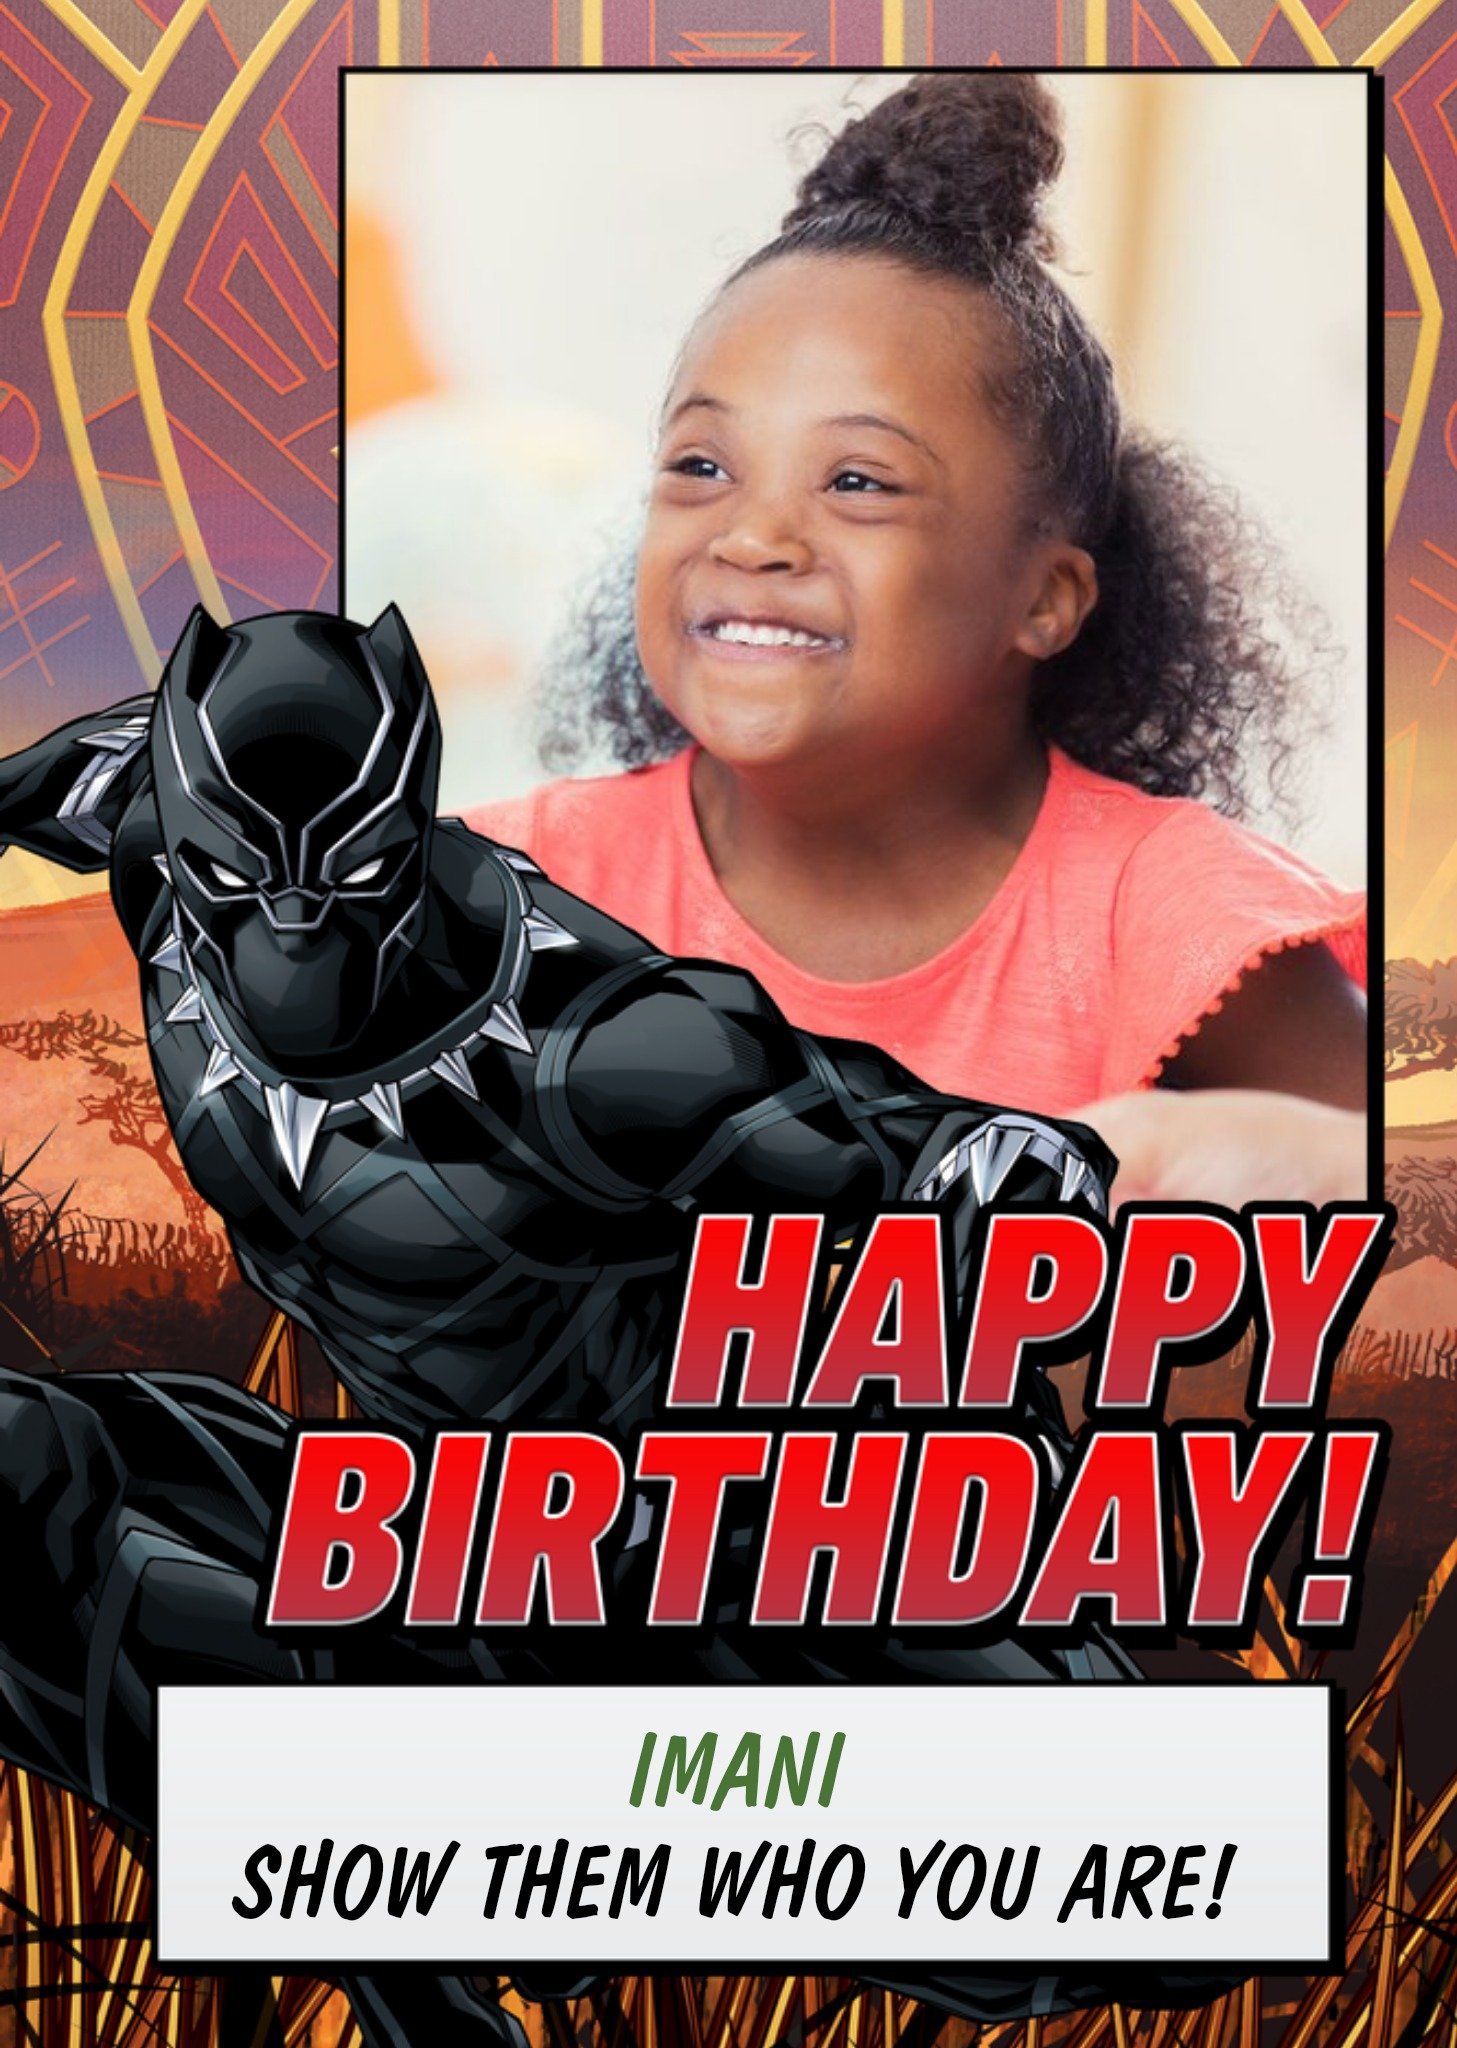 Marvel Avengers Black Panther Comic Book Photo Upload Birthday Card, Large